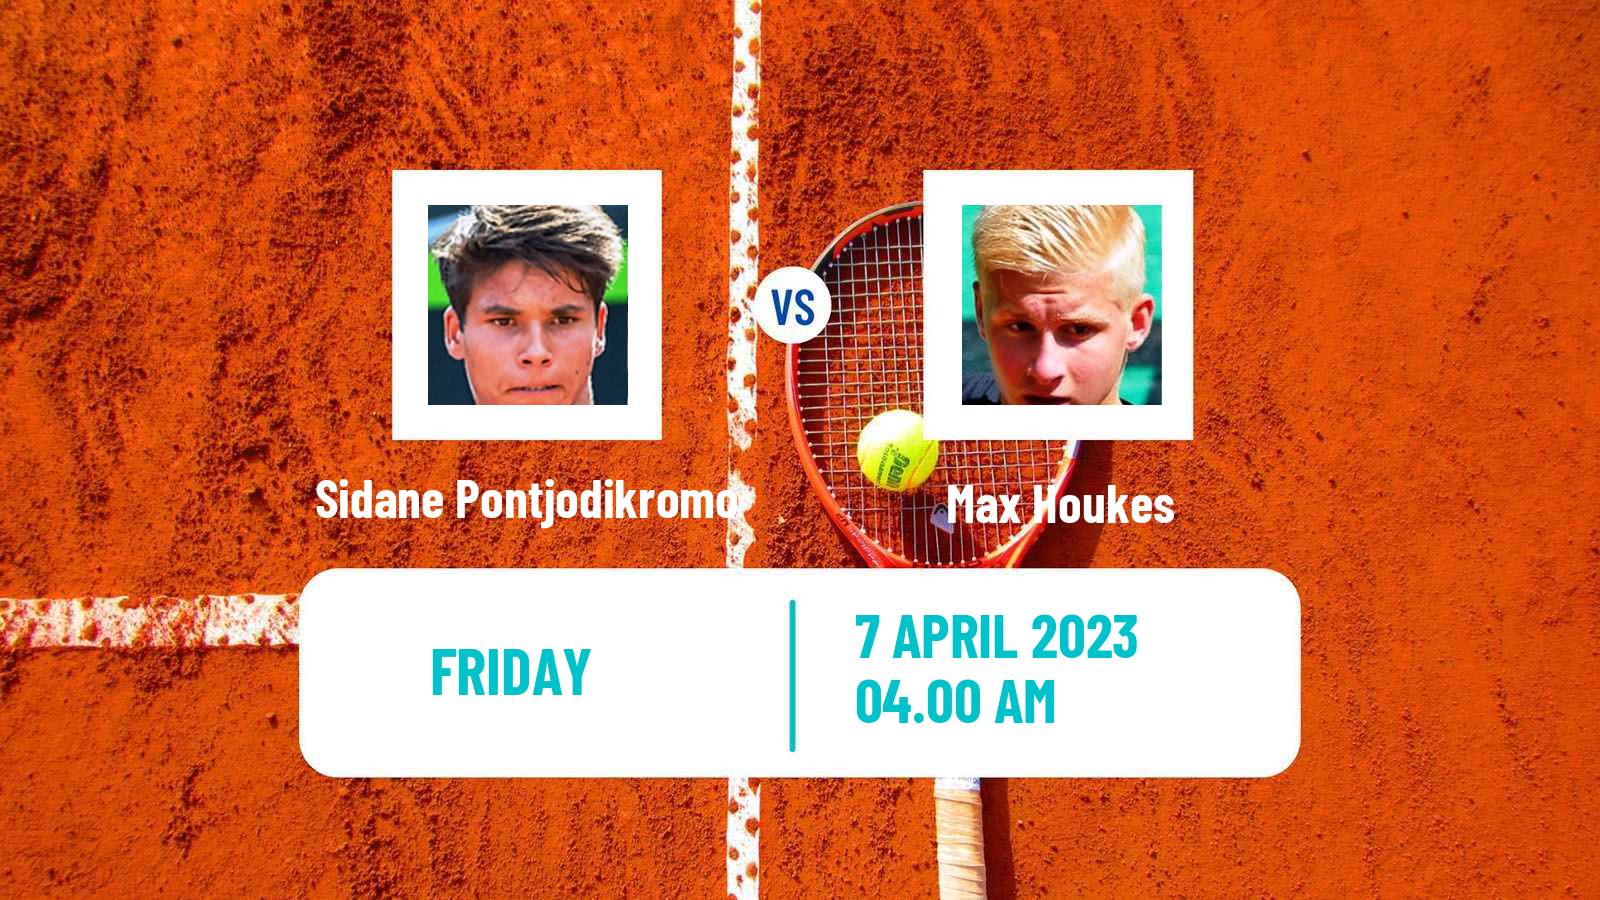 Tennis ITF Tournaments Sidane Pontjodikromo - Max Houkes